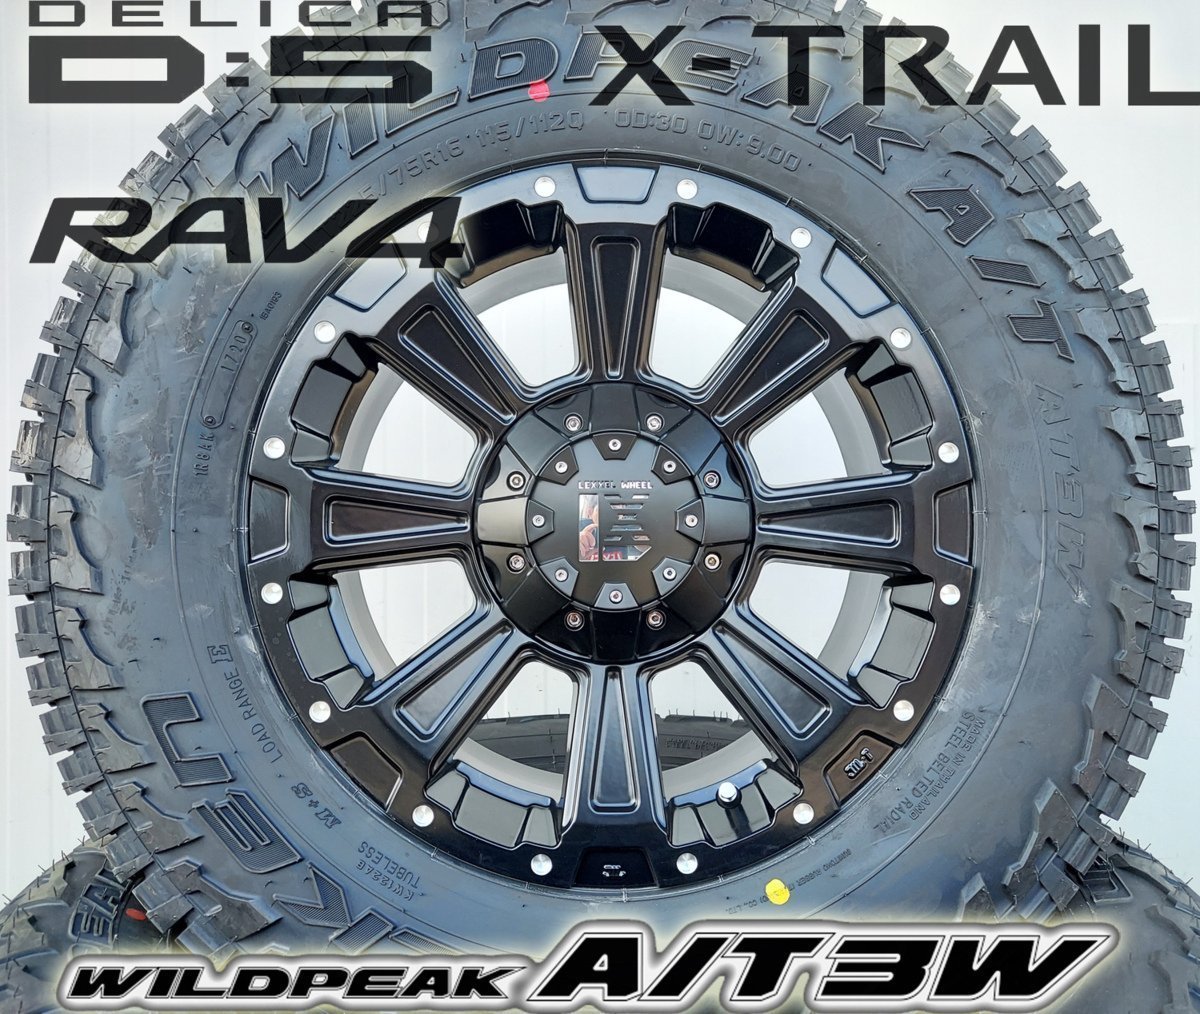 LEXXEL DeathRock デリカD5 RAV4 エクストレイル CX5 16インチ ファルケン WILDEPEAK A/T03W 225/75R16 235/70R16_画像5